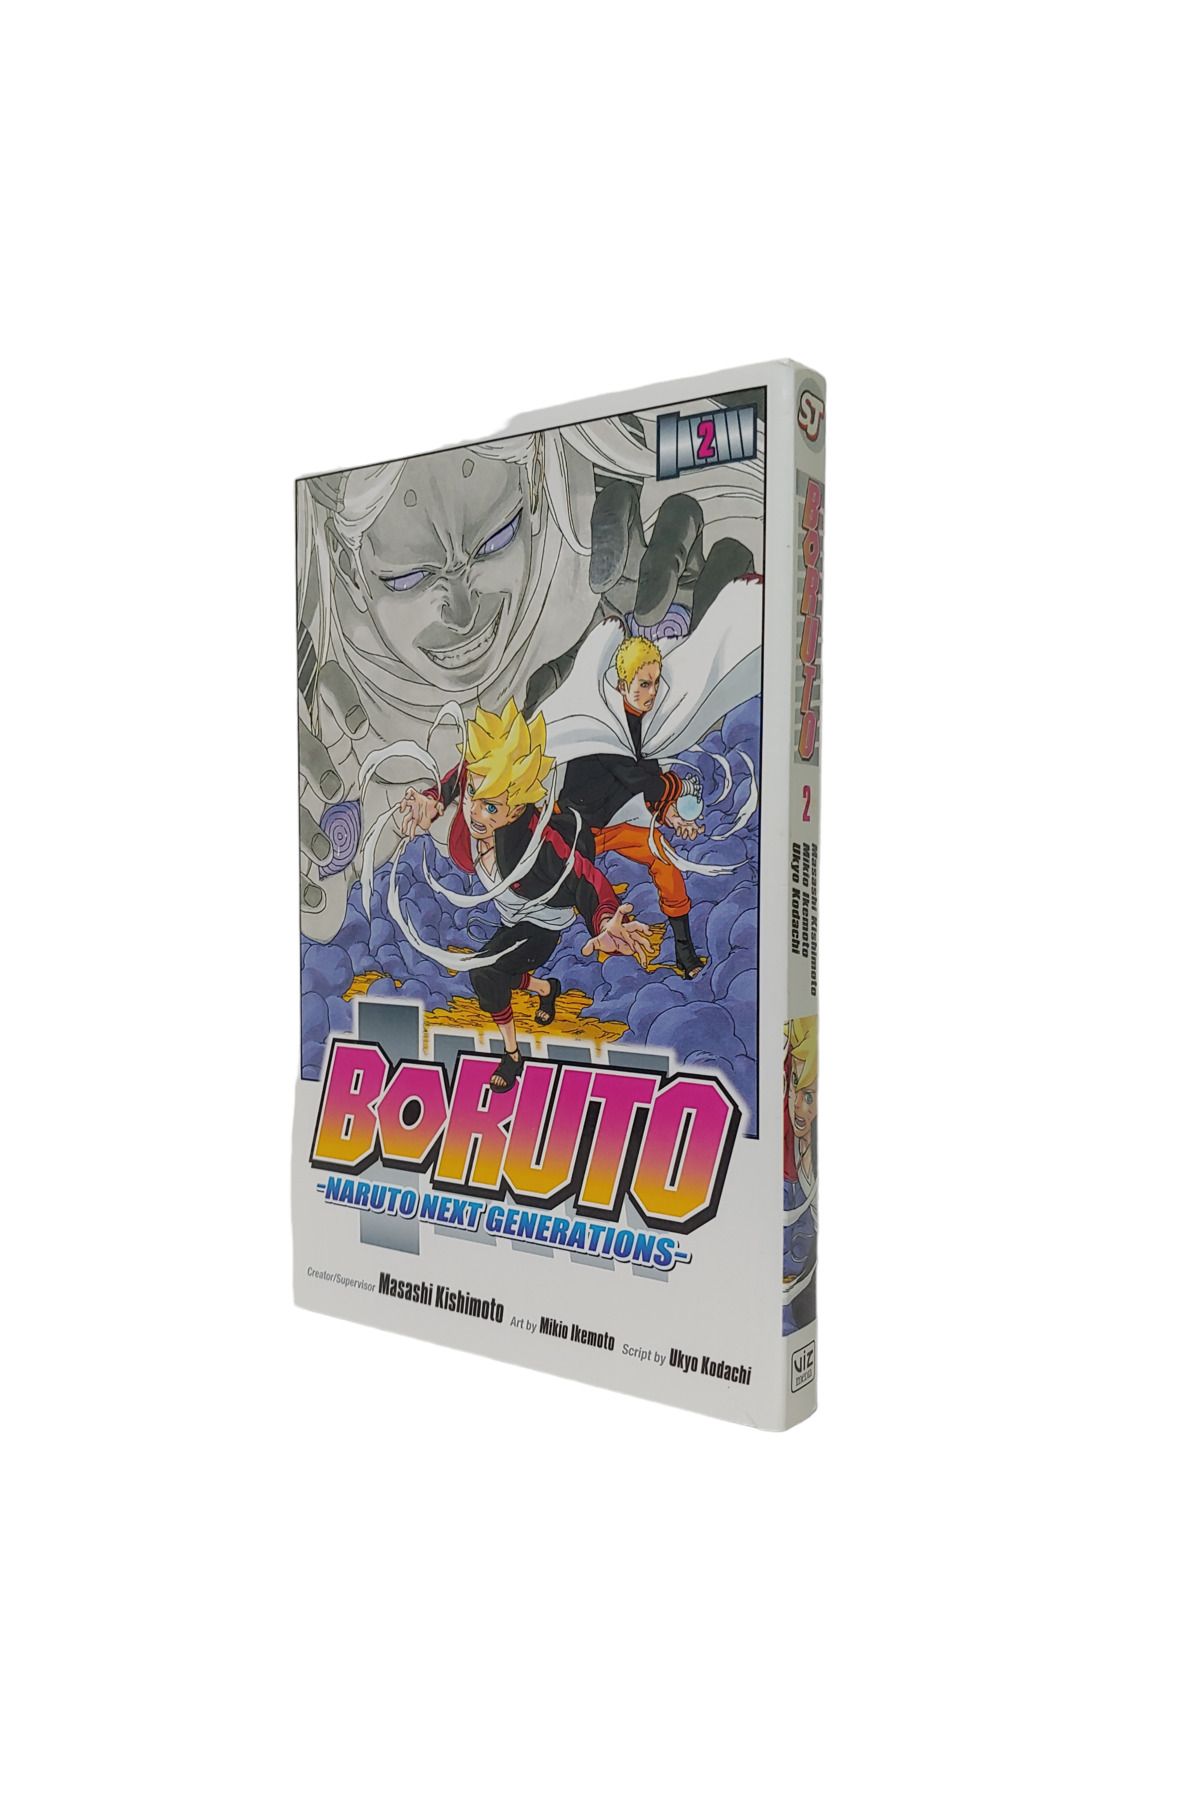 VIZ Media - New Release! Boruto: Naruto Next Generations, Vol. 2. #Boruto